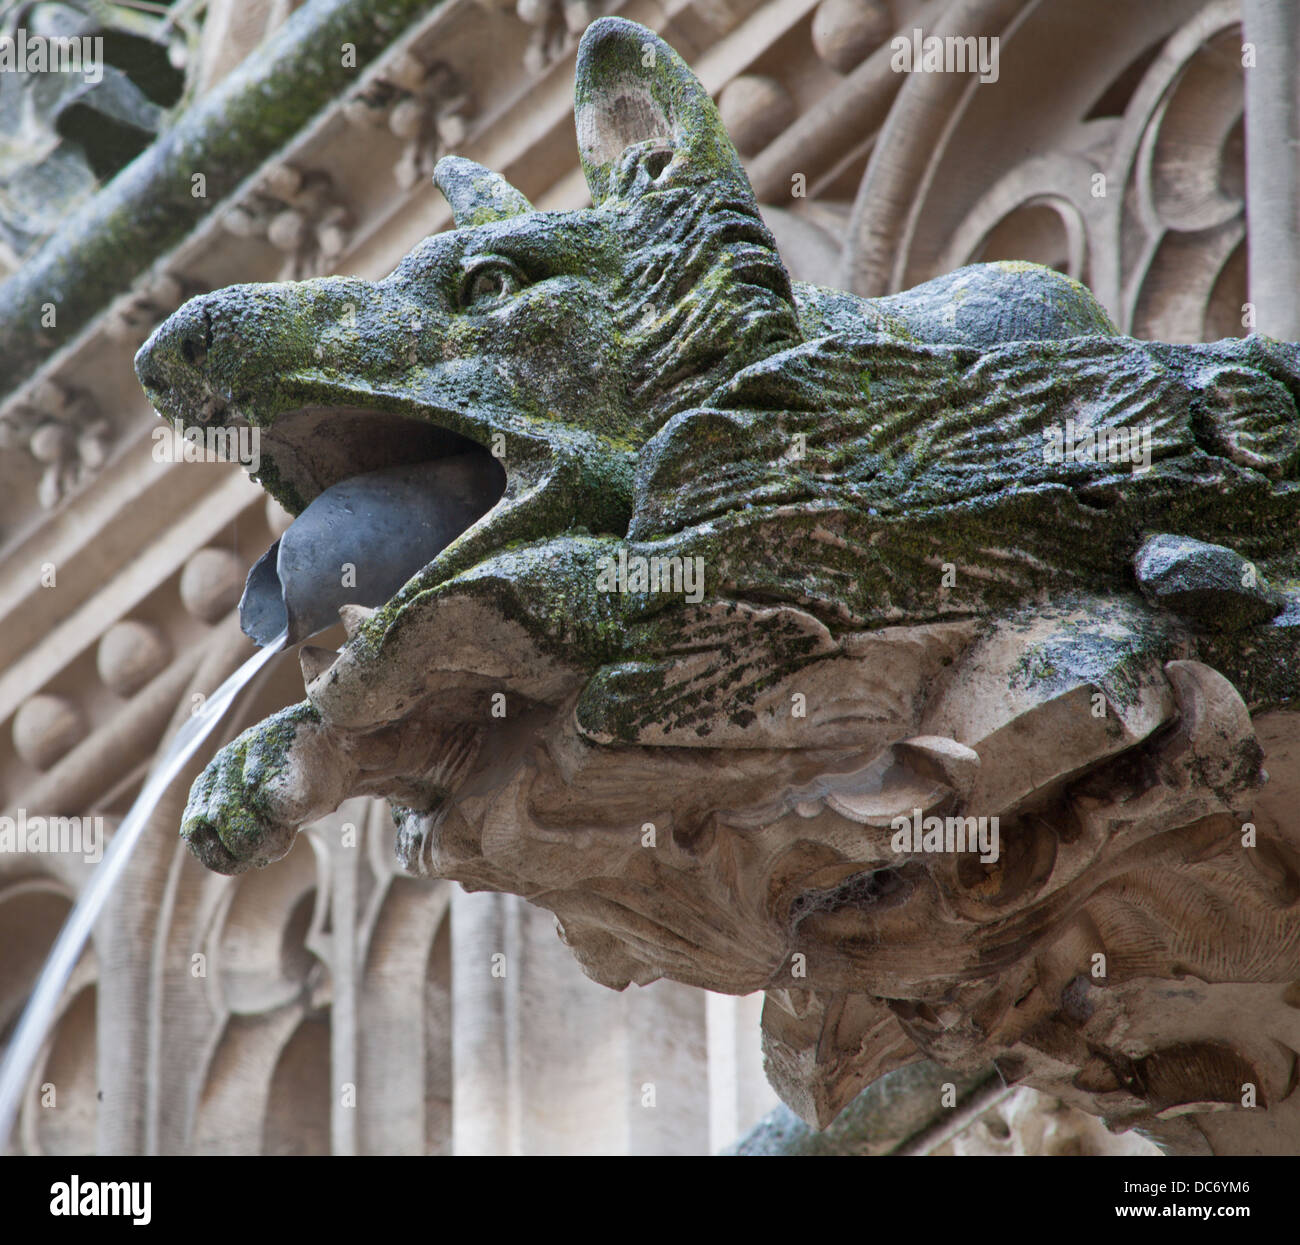 TOLEDO - MARCH 8: Detail of animal as gothic spoutler in rain from atrium of Monasterio de San Juan de los Reyes Stock Photo